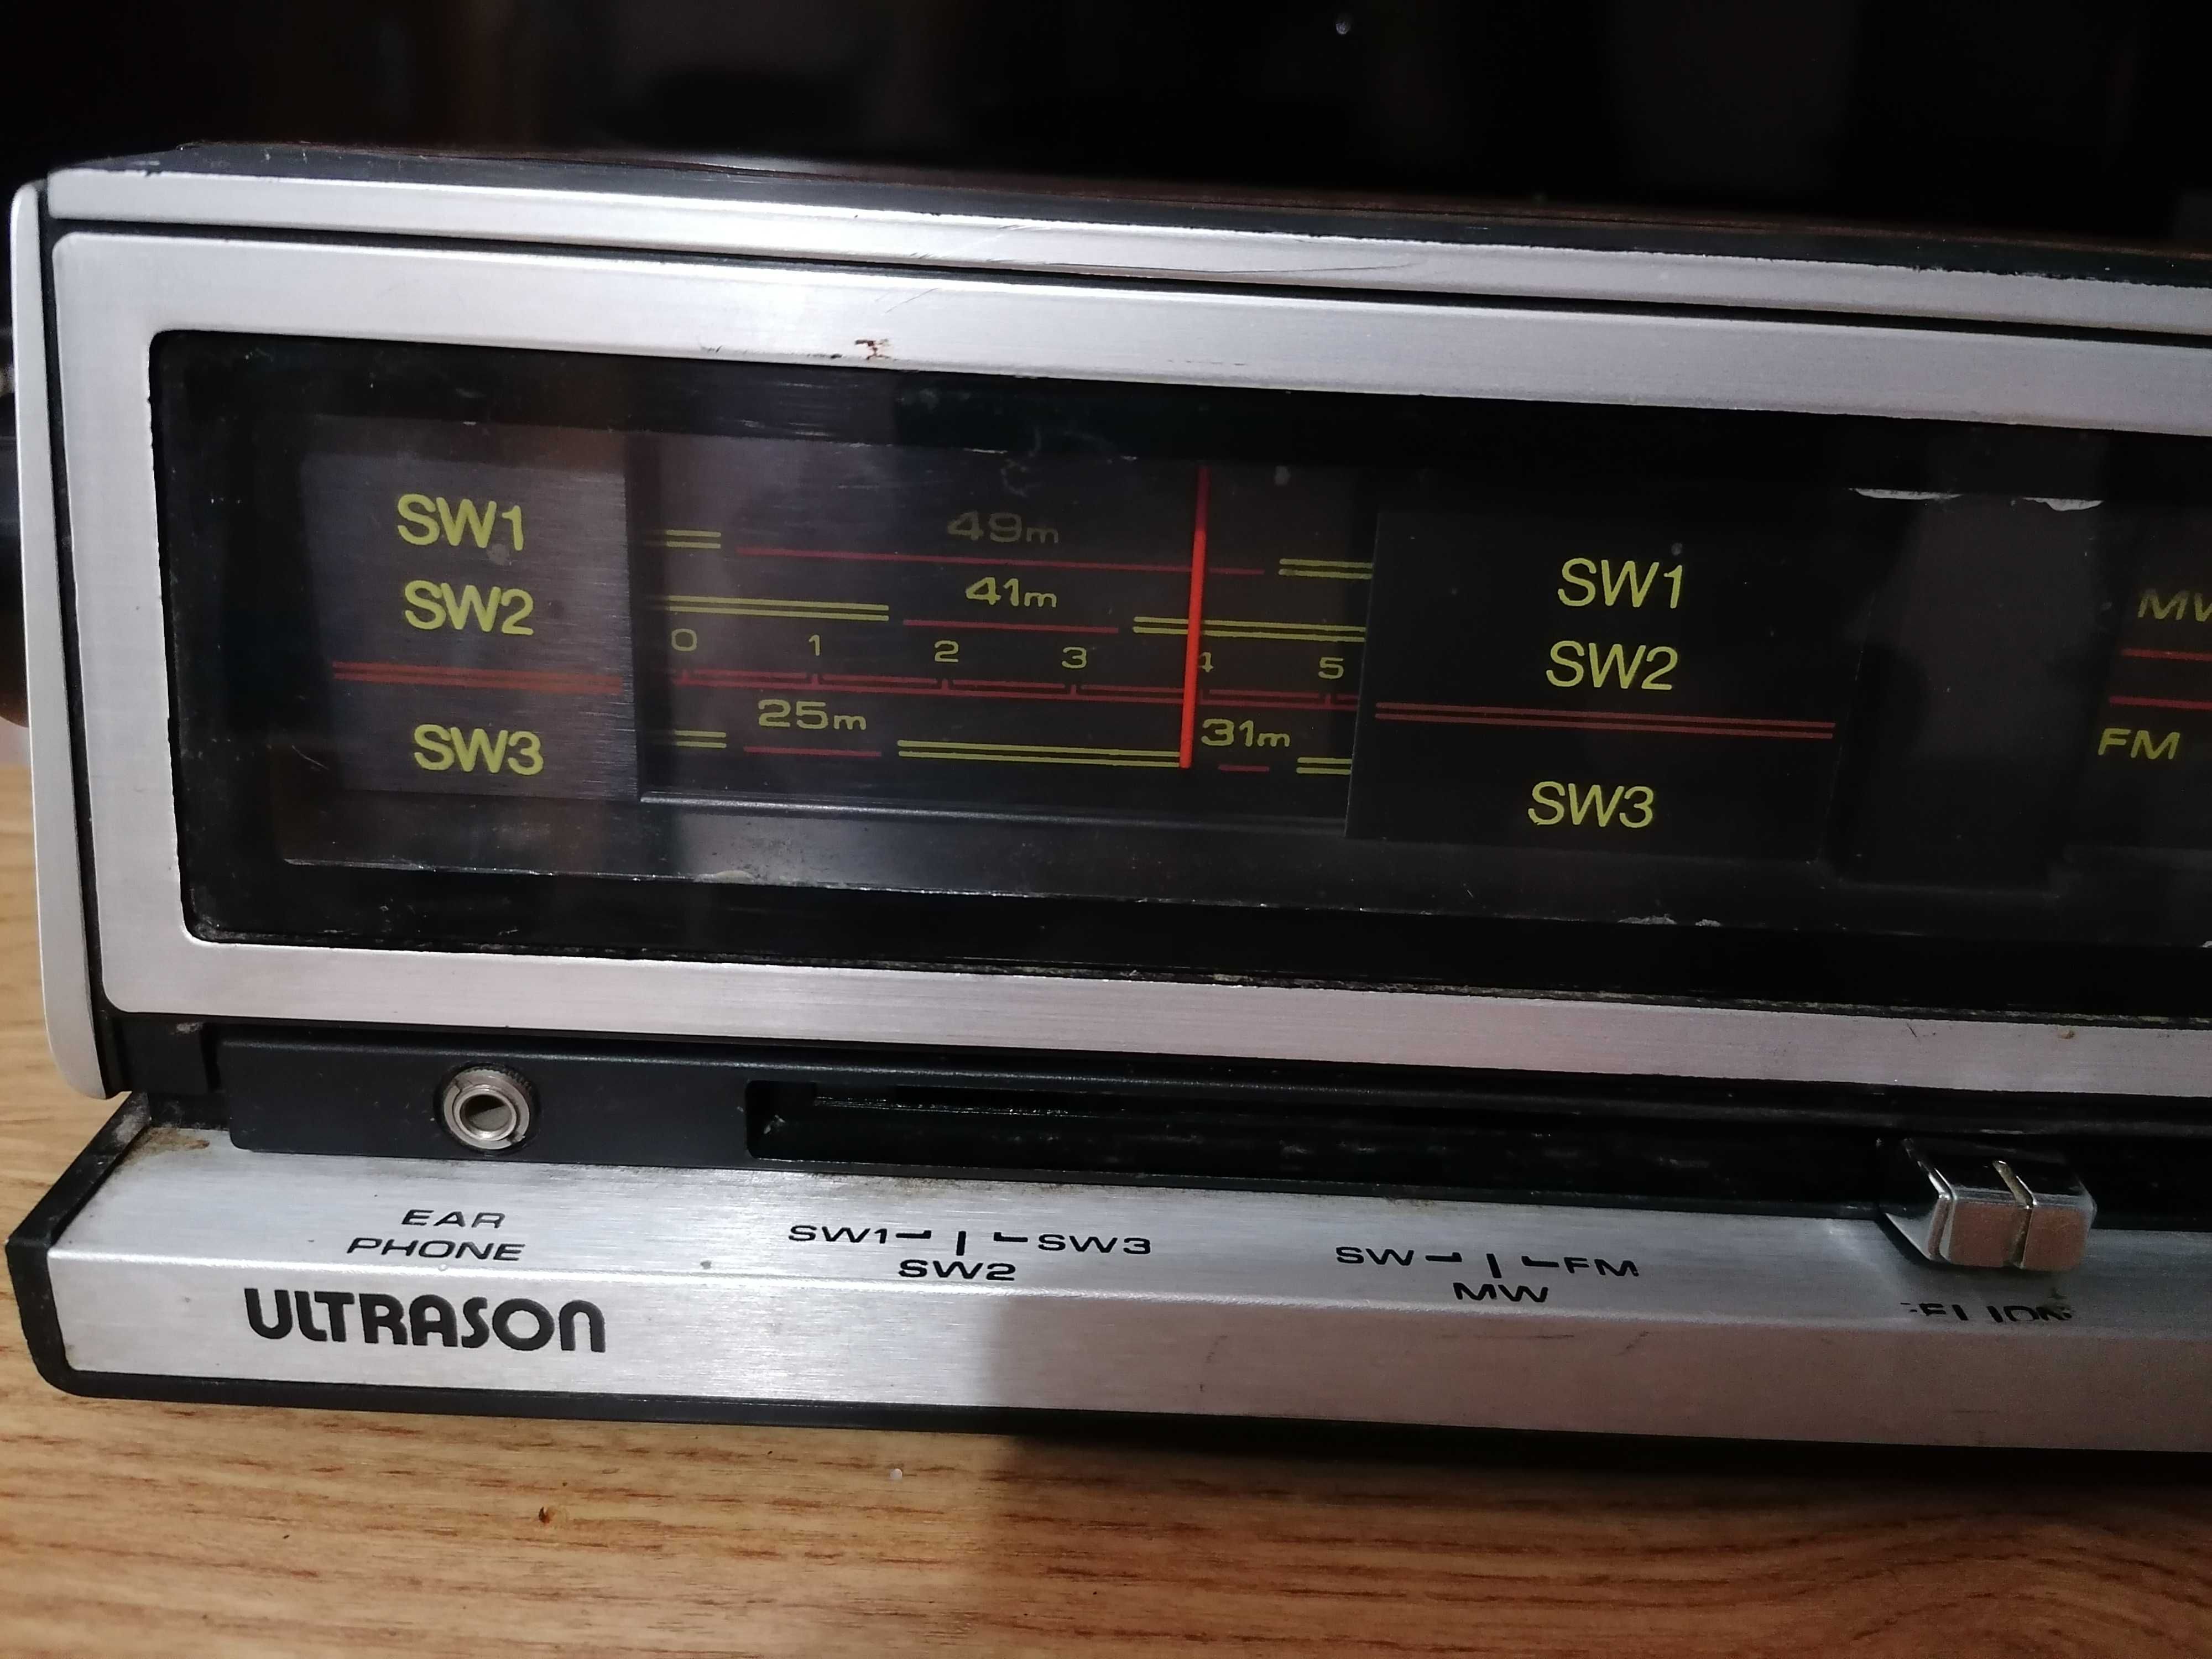 Aparat radio Ultrason de colectie functional anii 80 electronica